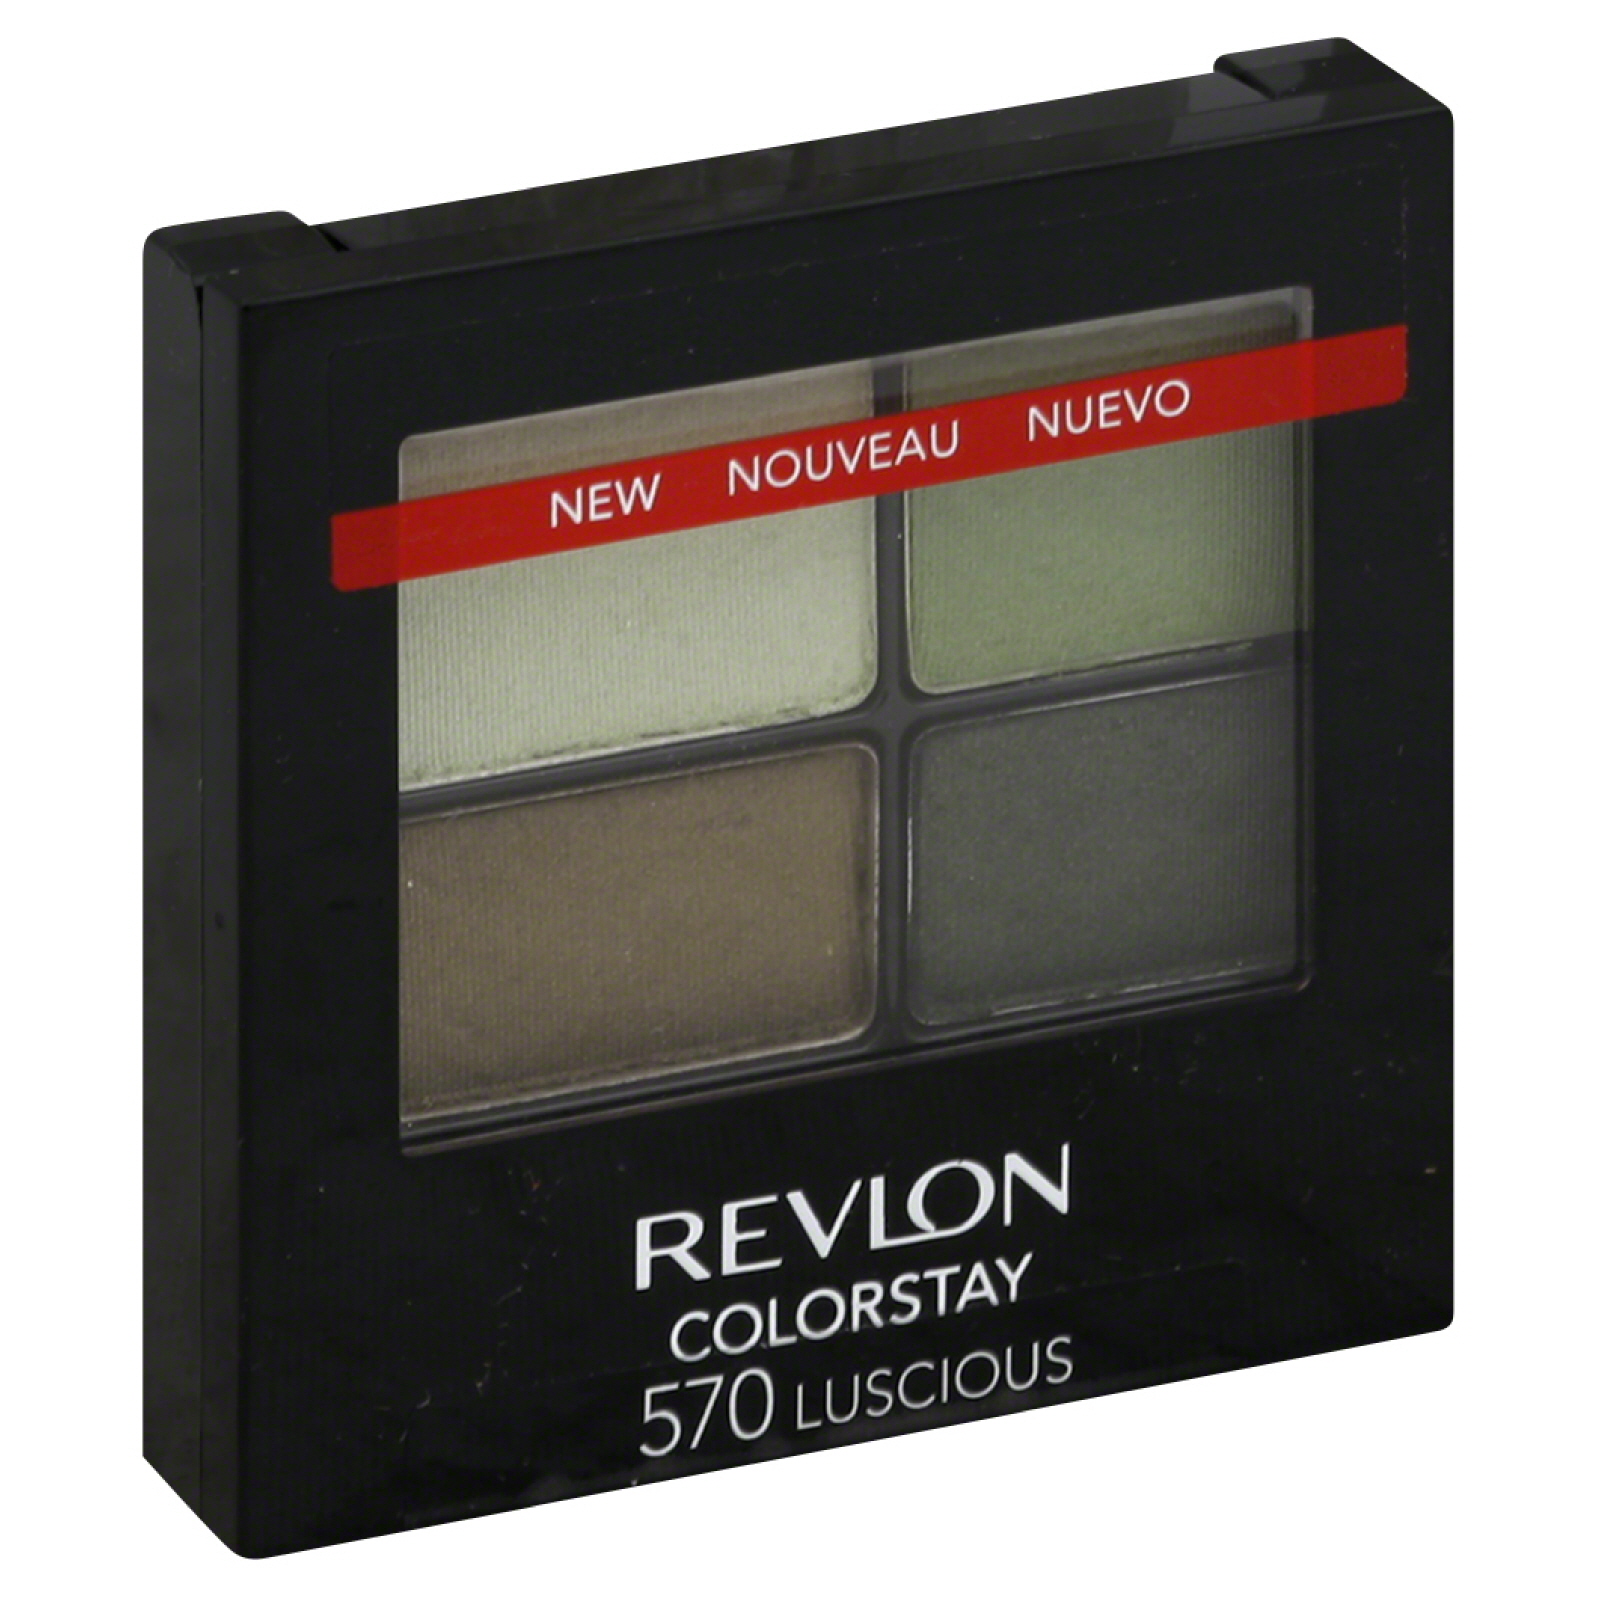 Revlon Colorstay Eye Shadow Quad Luscious 0.16 fl oz